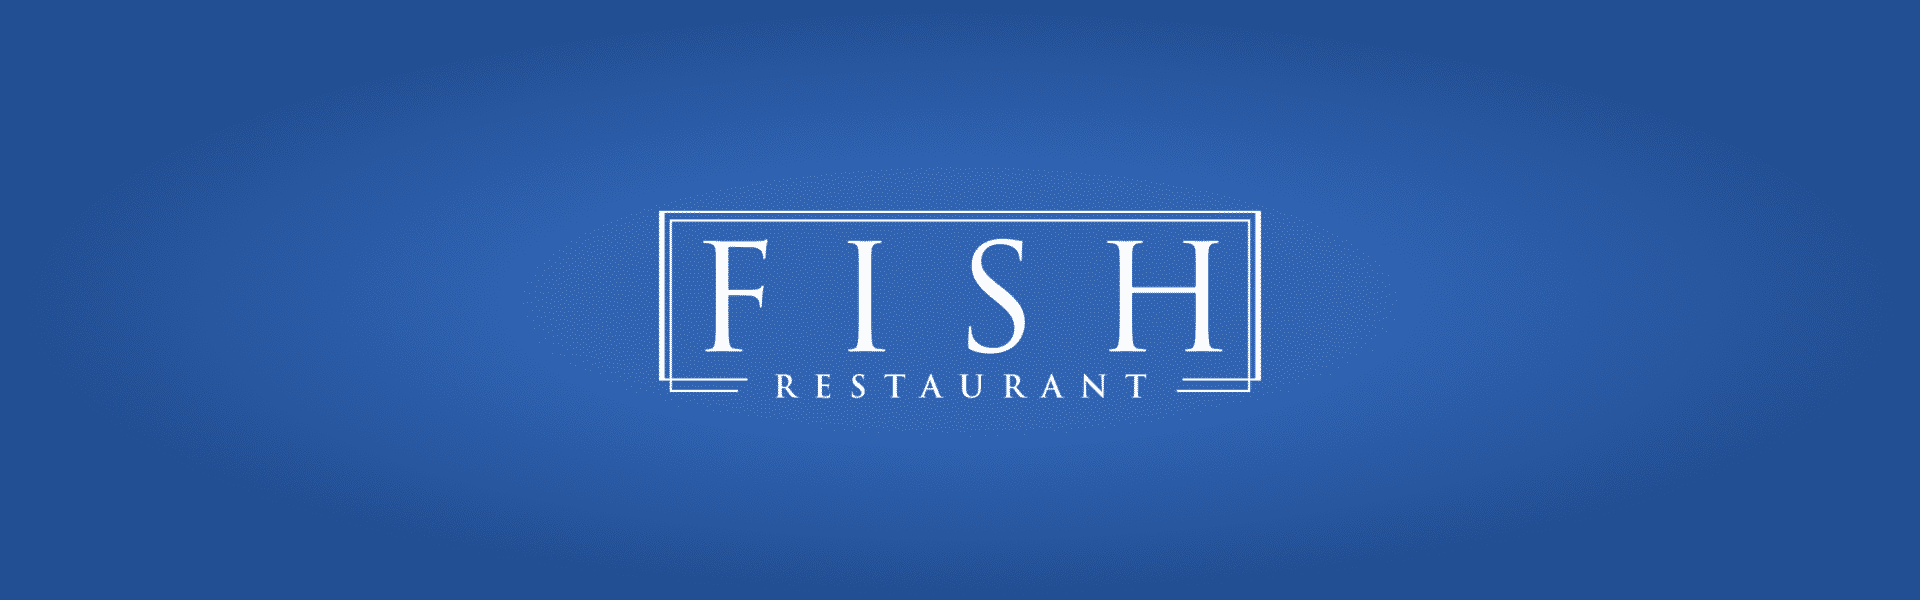 seafood restaurant